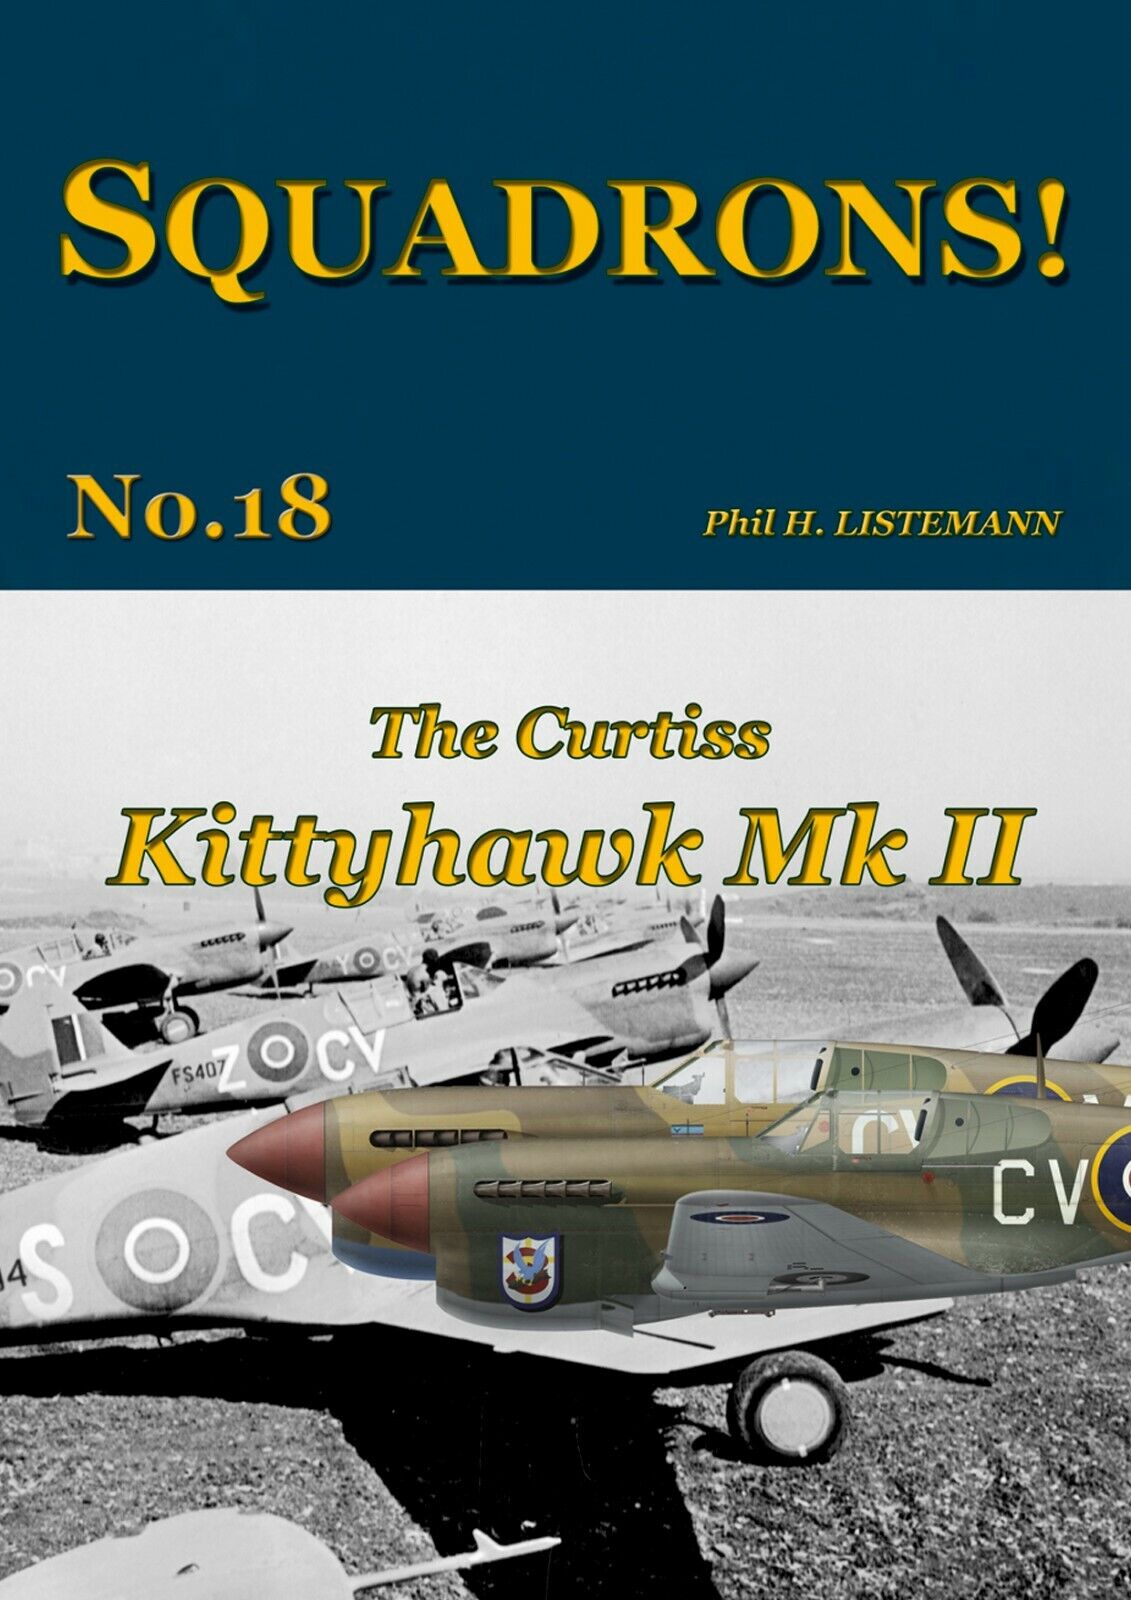 SQUADRONS No. 18 - The Curtiss KITTYHAWK II